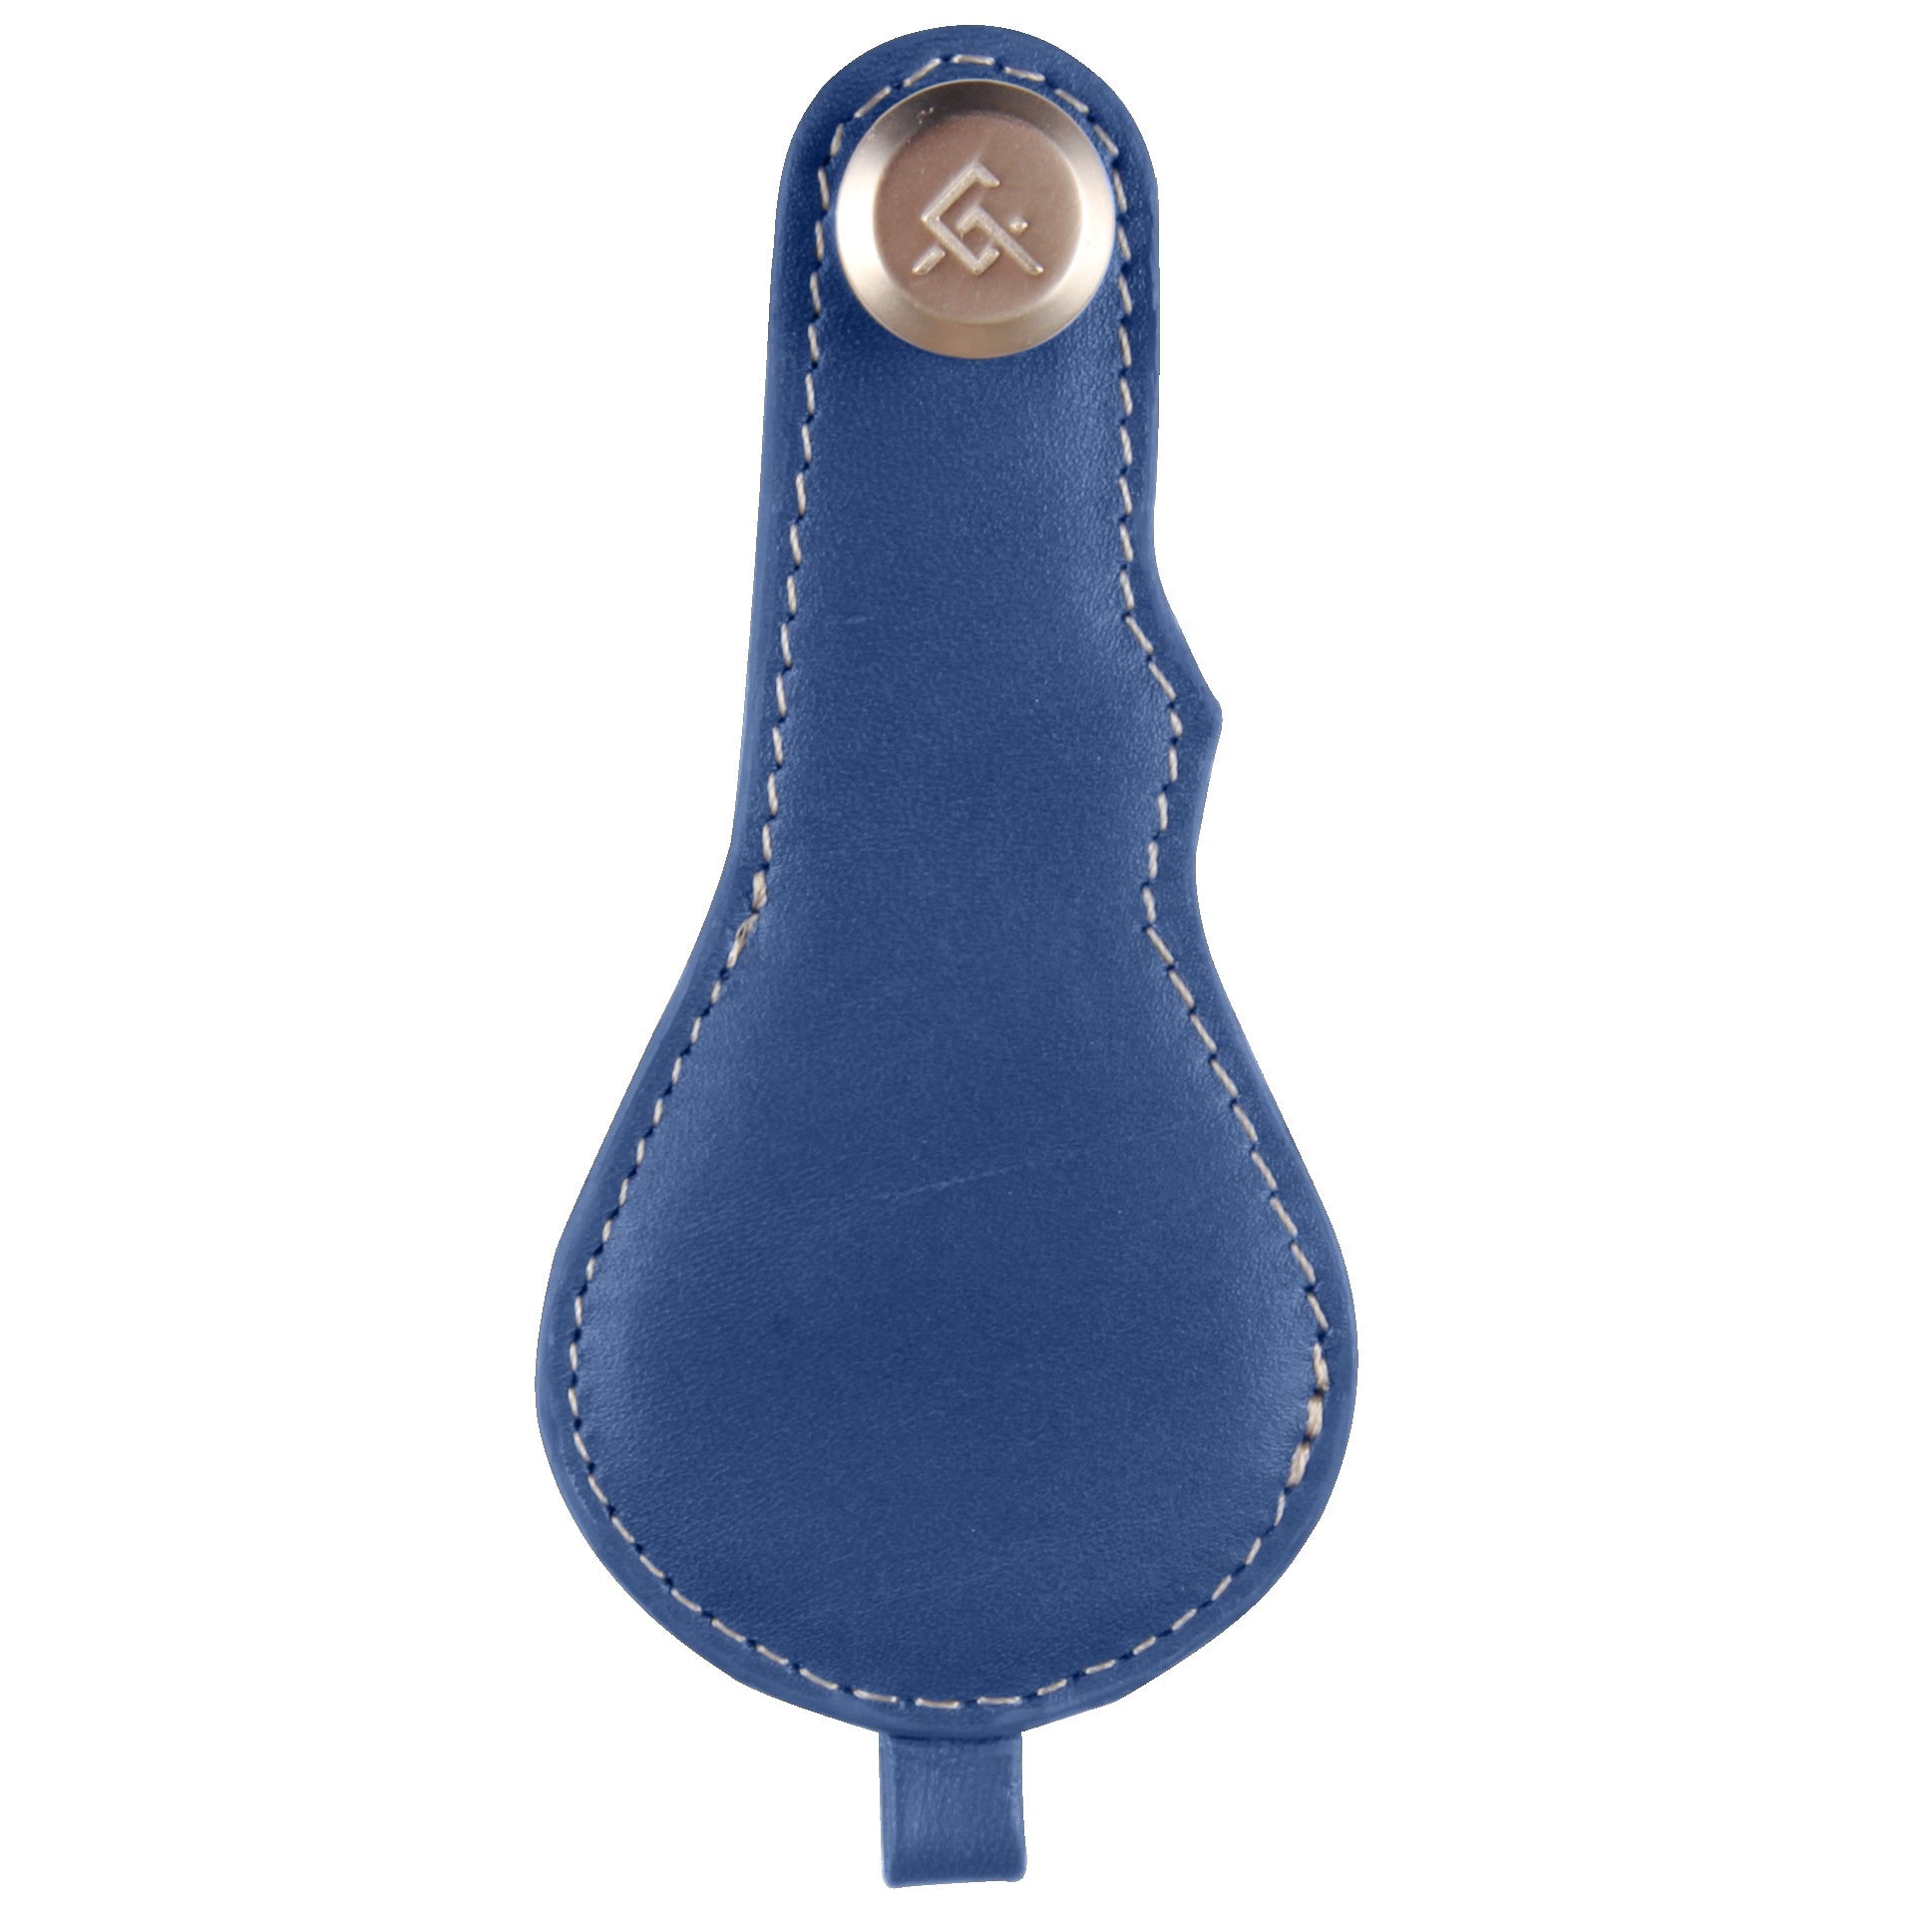 Clavis Leather Key Holder (Customisable) - Cuir Ally Smart Goods